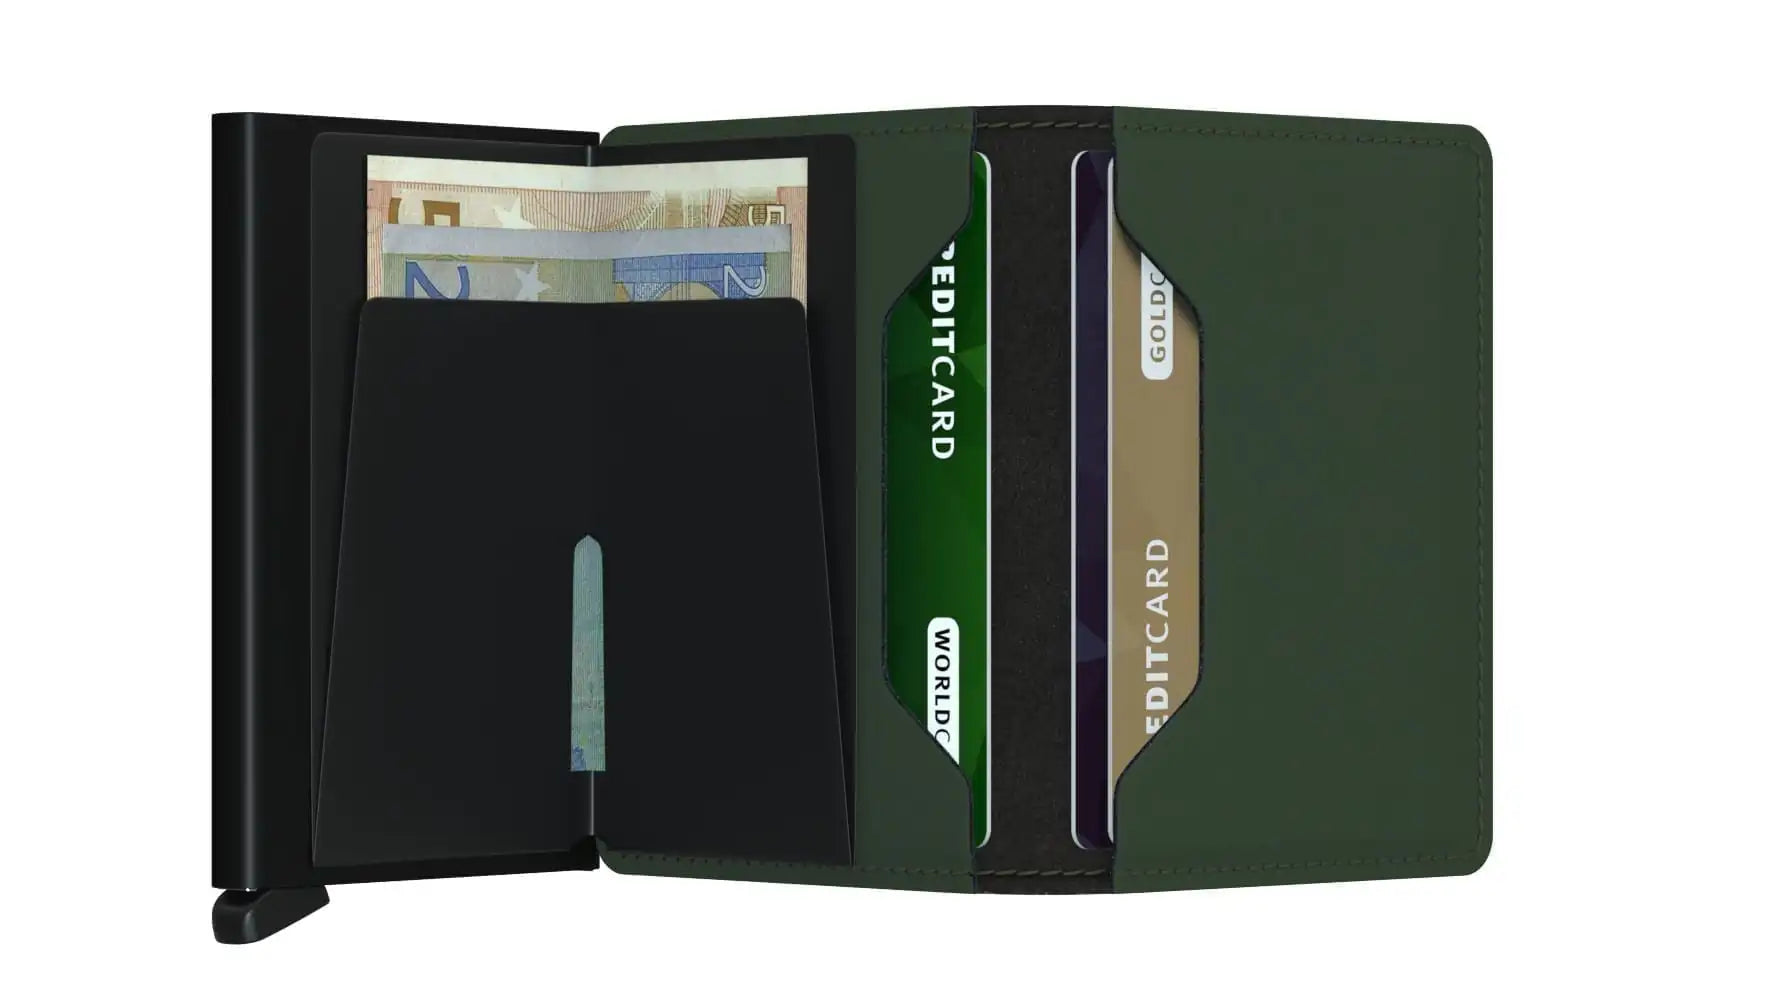 Secrid Slim Wallet Matte Green/Black